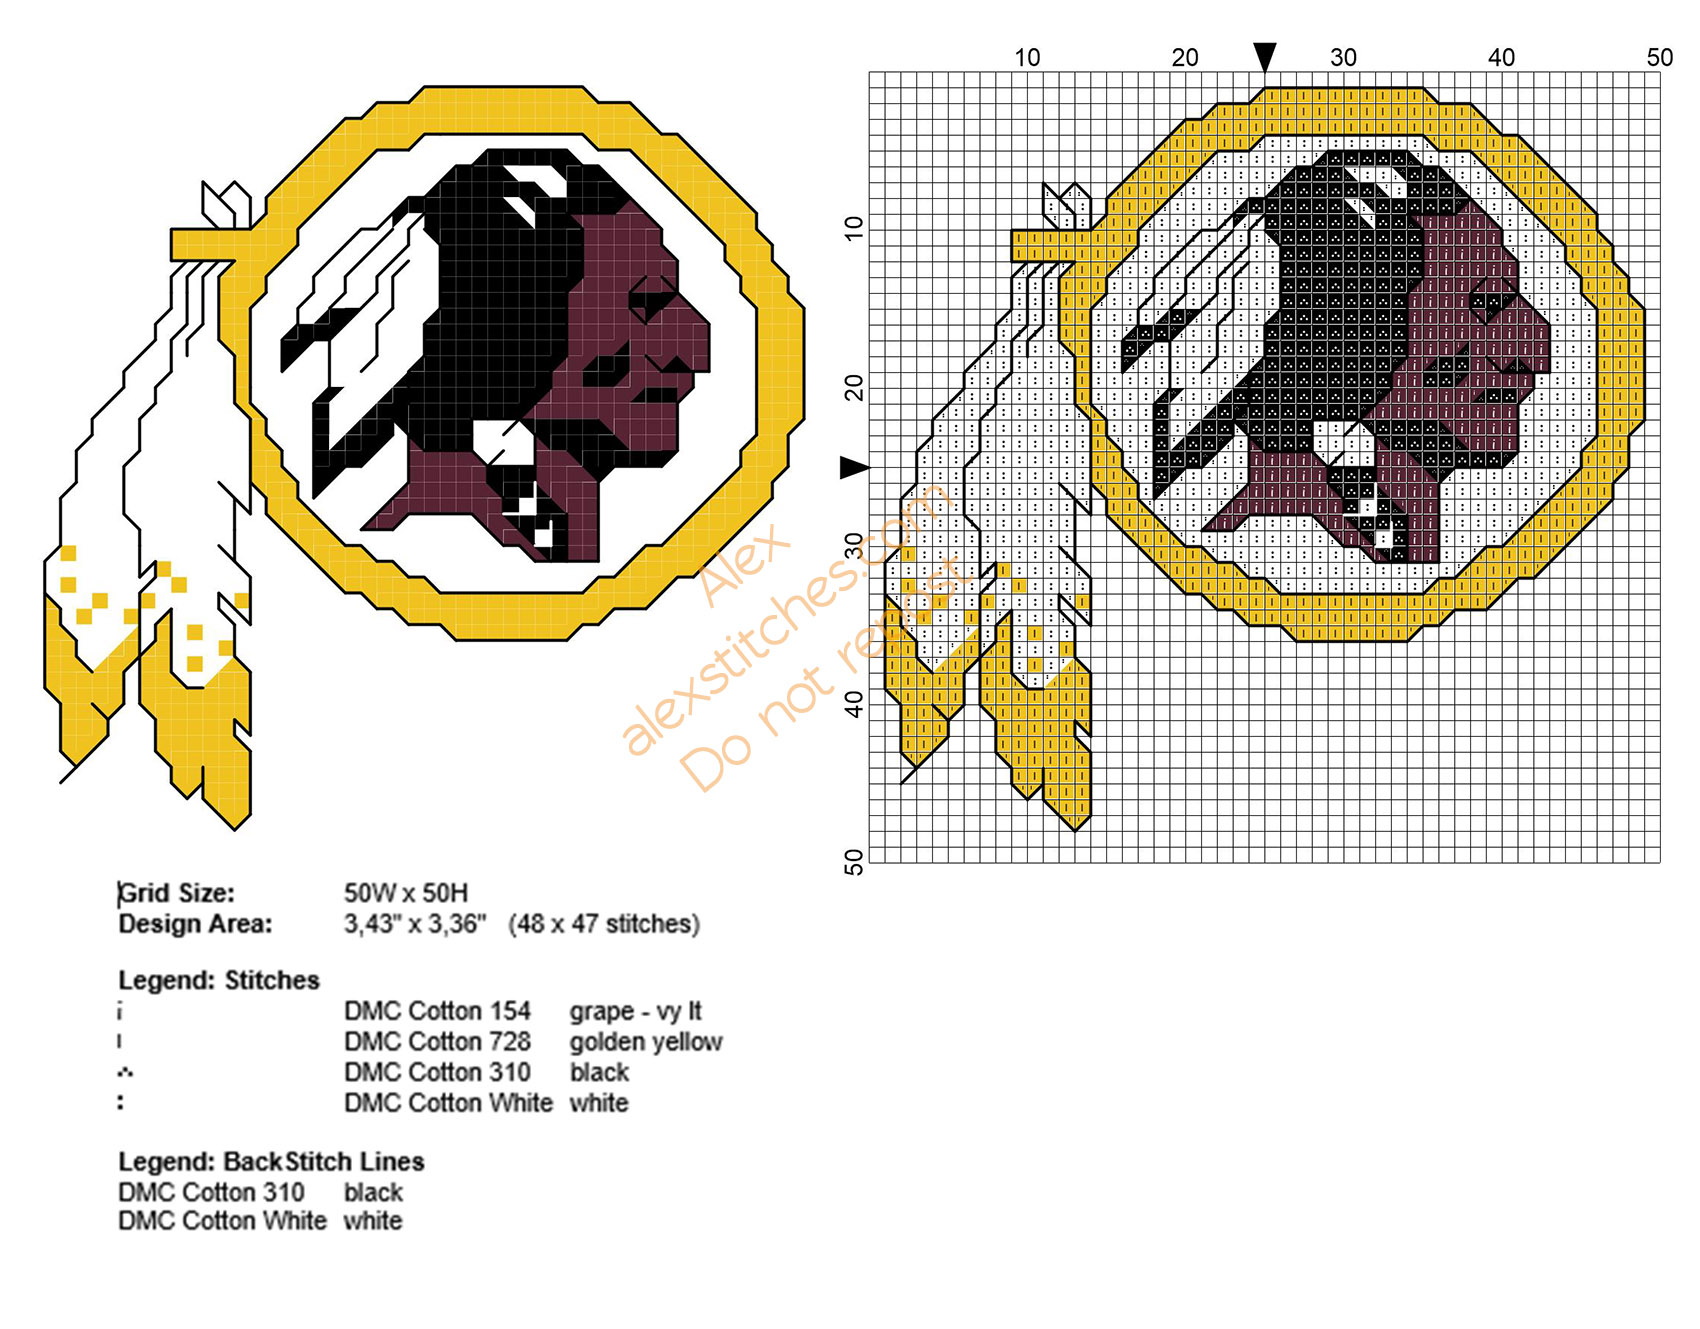 Washington Redskins NFL team free cross stitch pattern